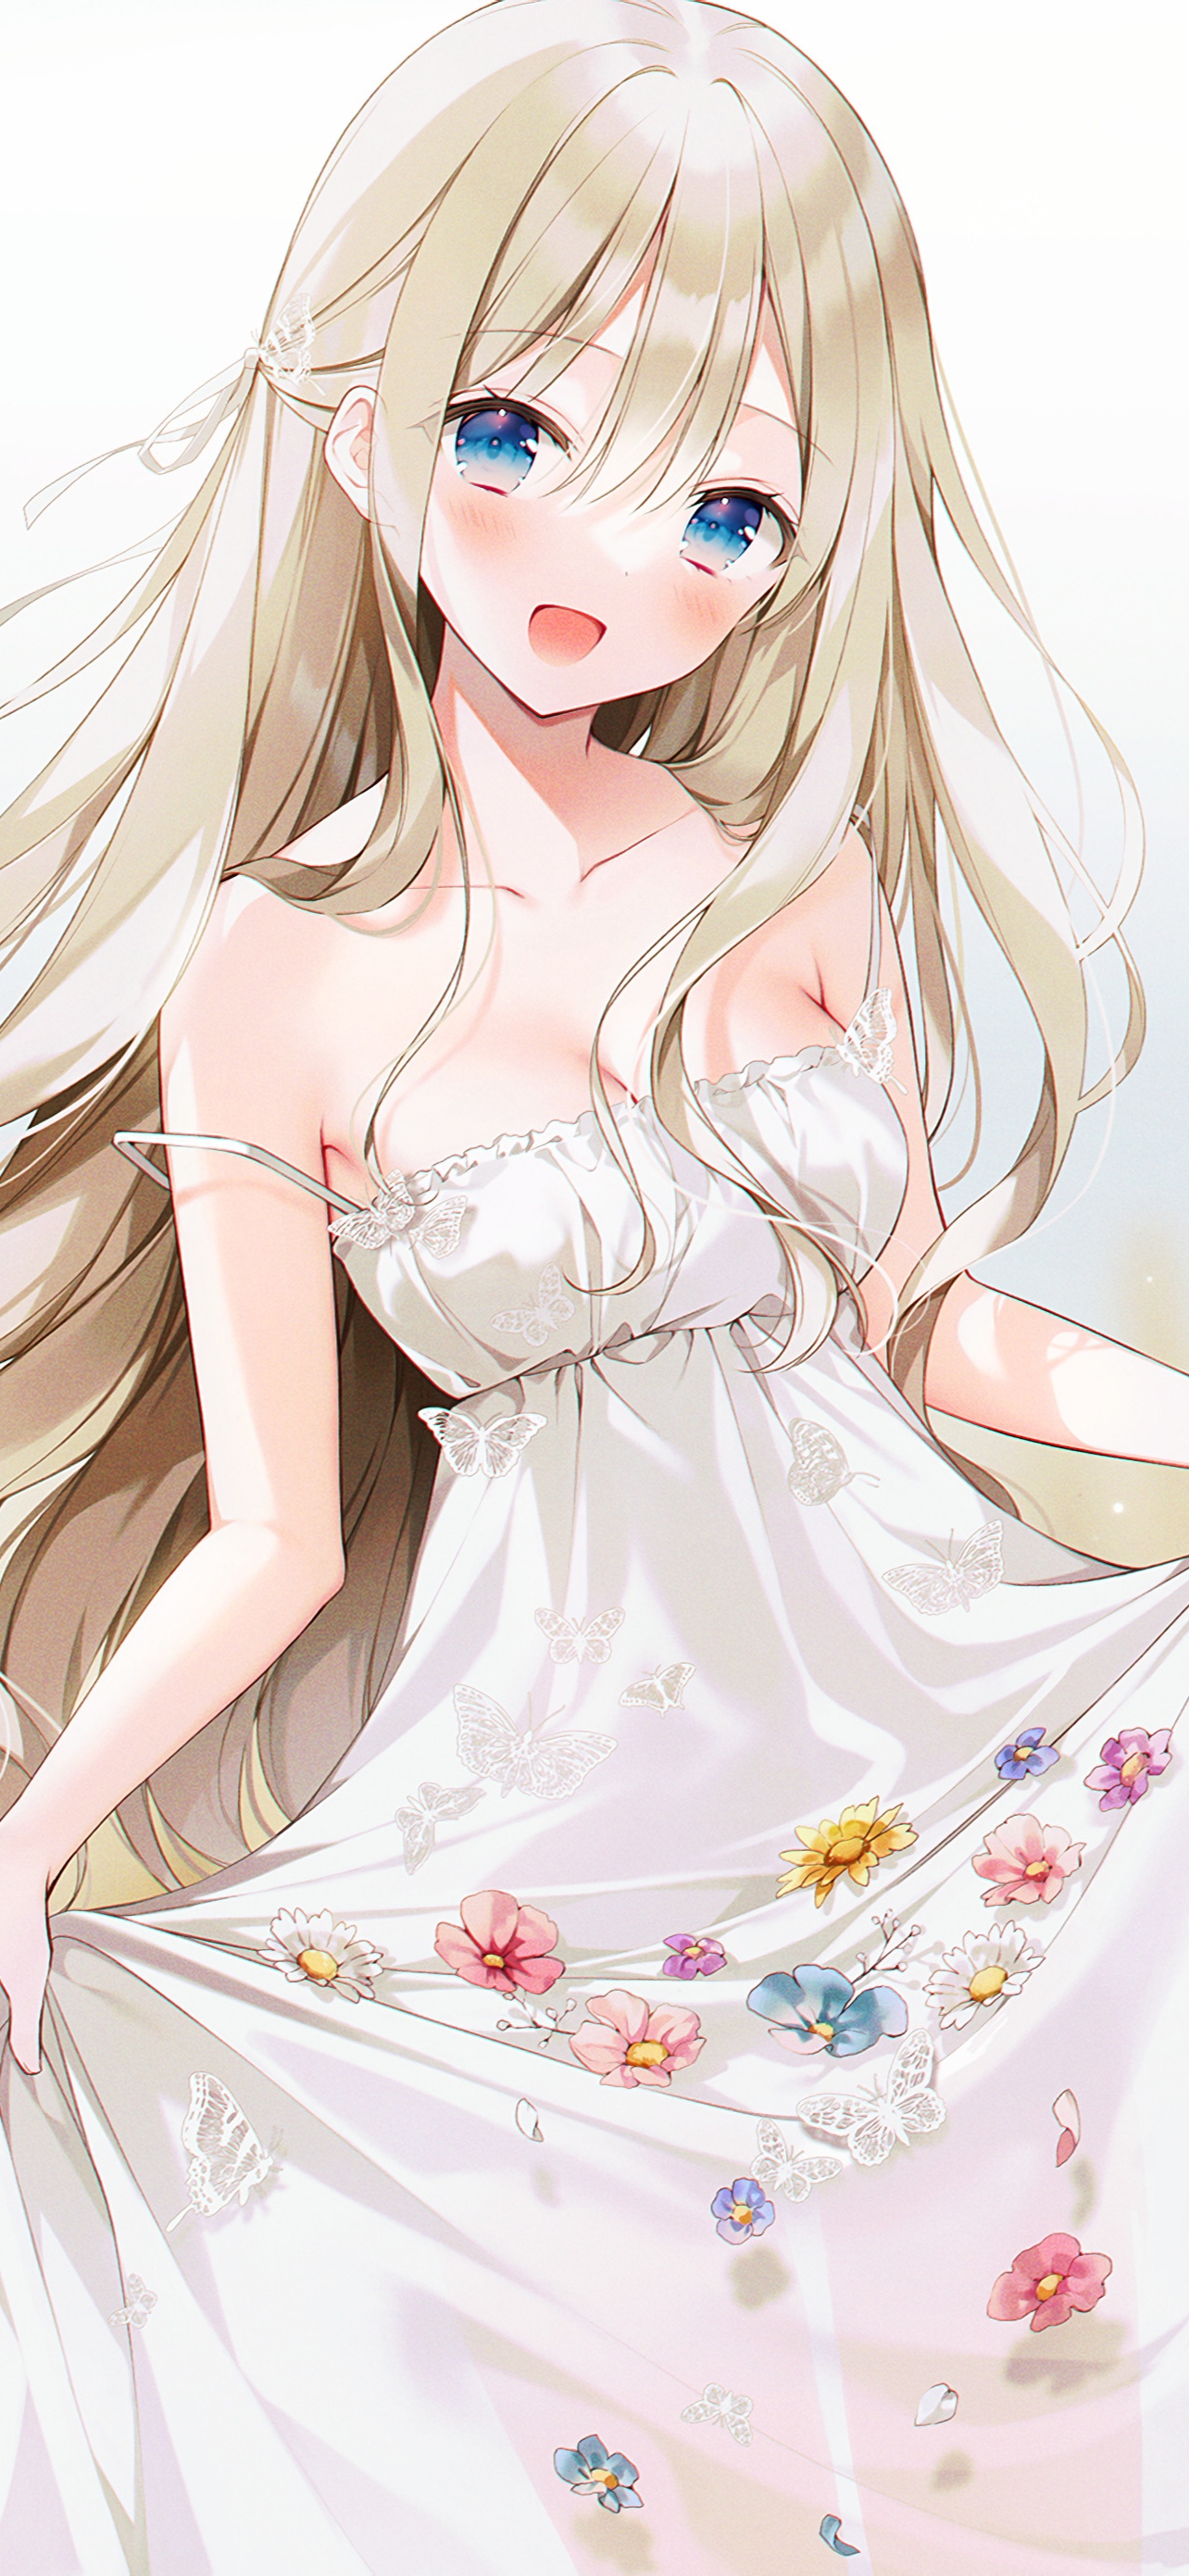 Anime 1284x2782 anime girls anime Weri blonde blue eyes dress sun dress cleavage